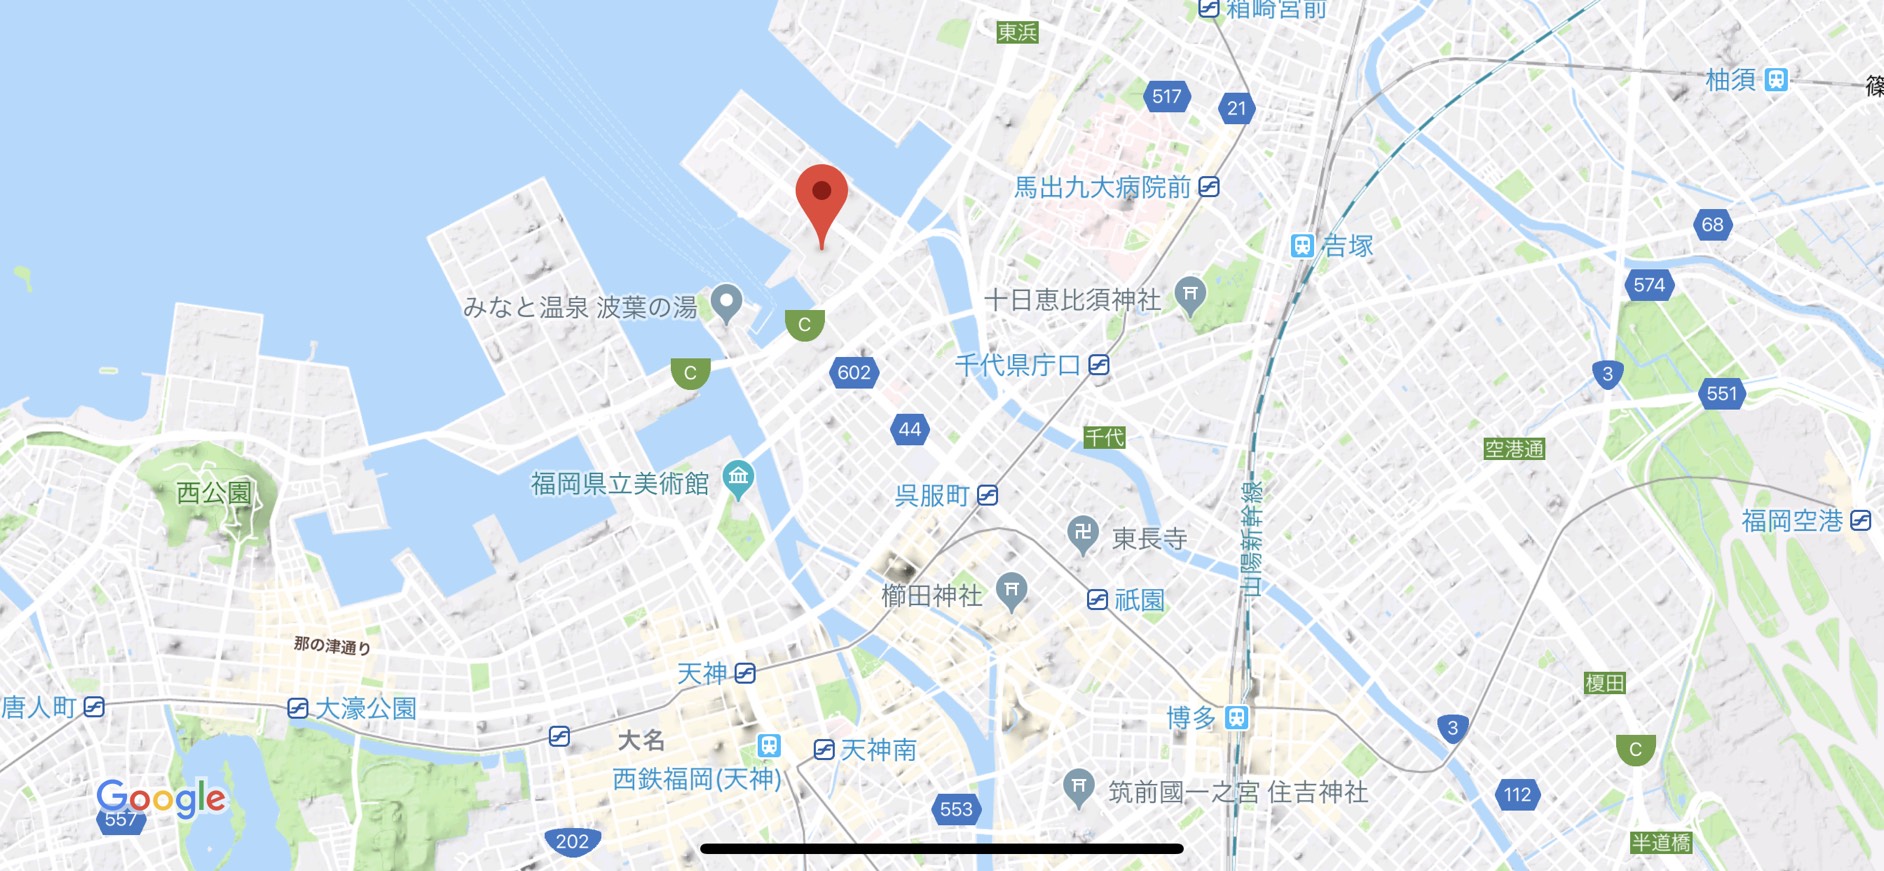 ONE OK ROCK 2019 – 2020 “Eye of the Storm” JAPAN TOUR 三重県営サンアリーナ 地図2